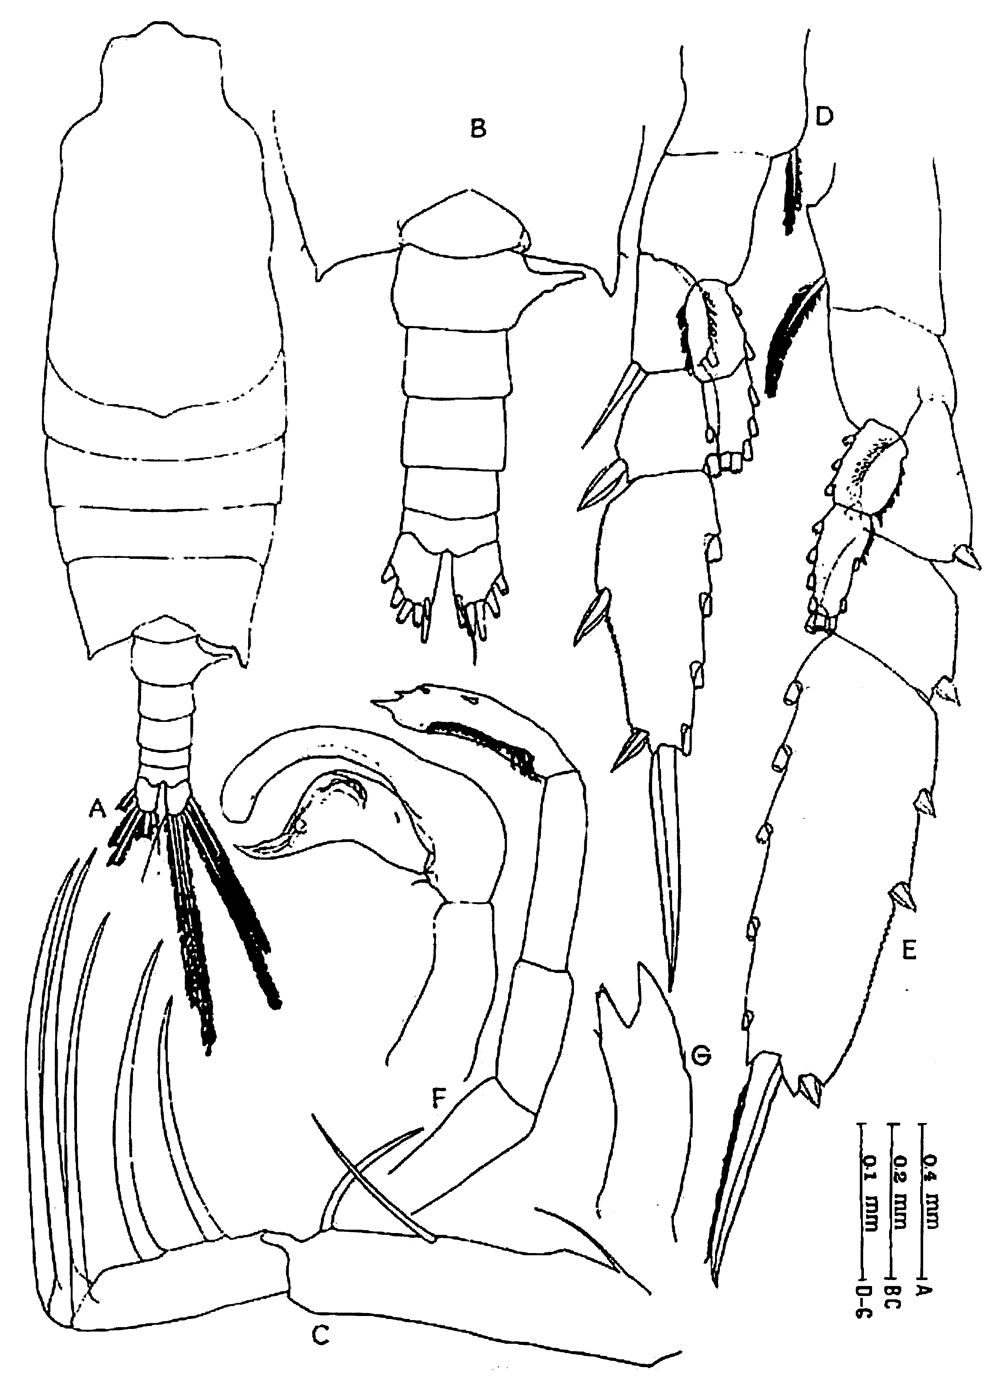 Espèce Candacia tenuimana - Planche 10 de figures morphologiques